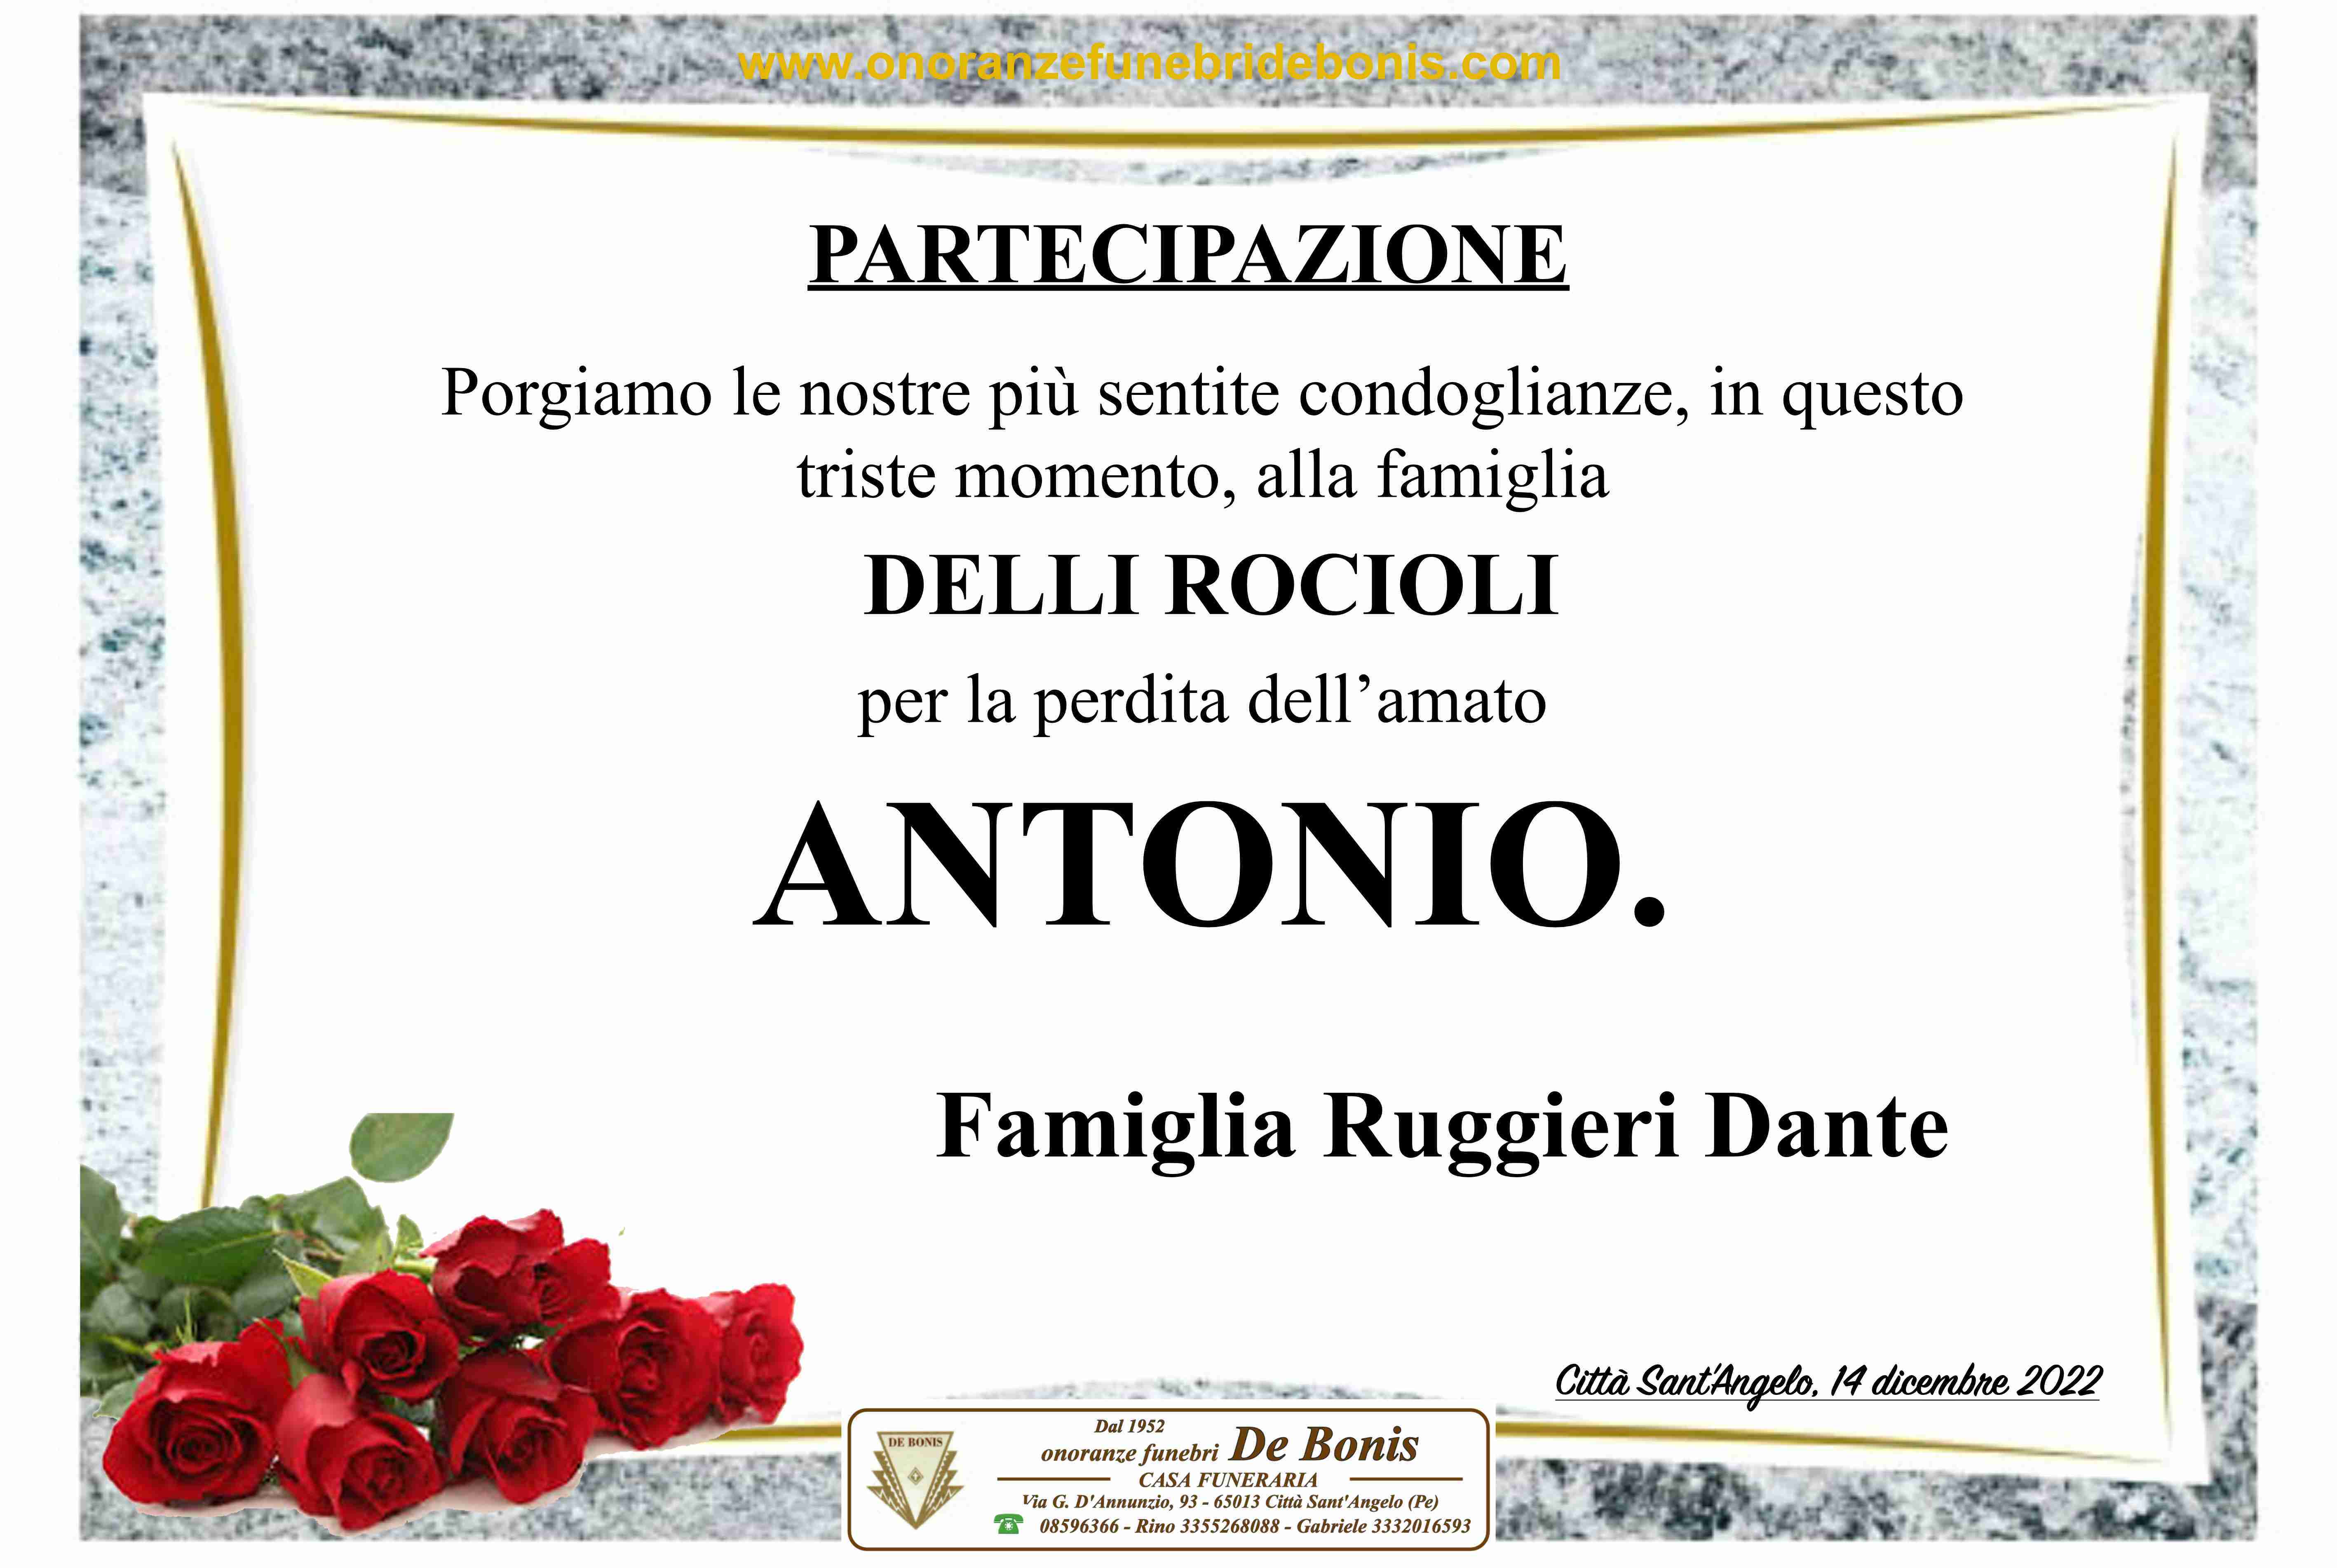 Antonio Delli Rocioli